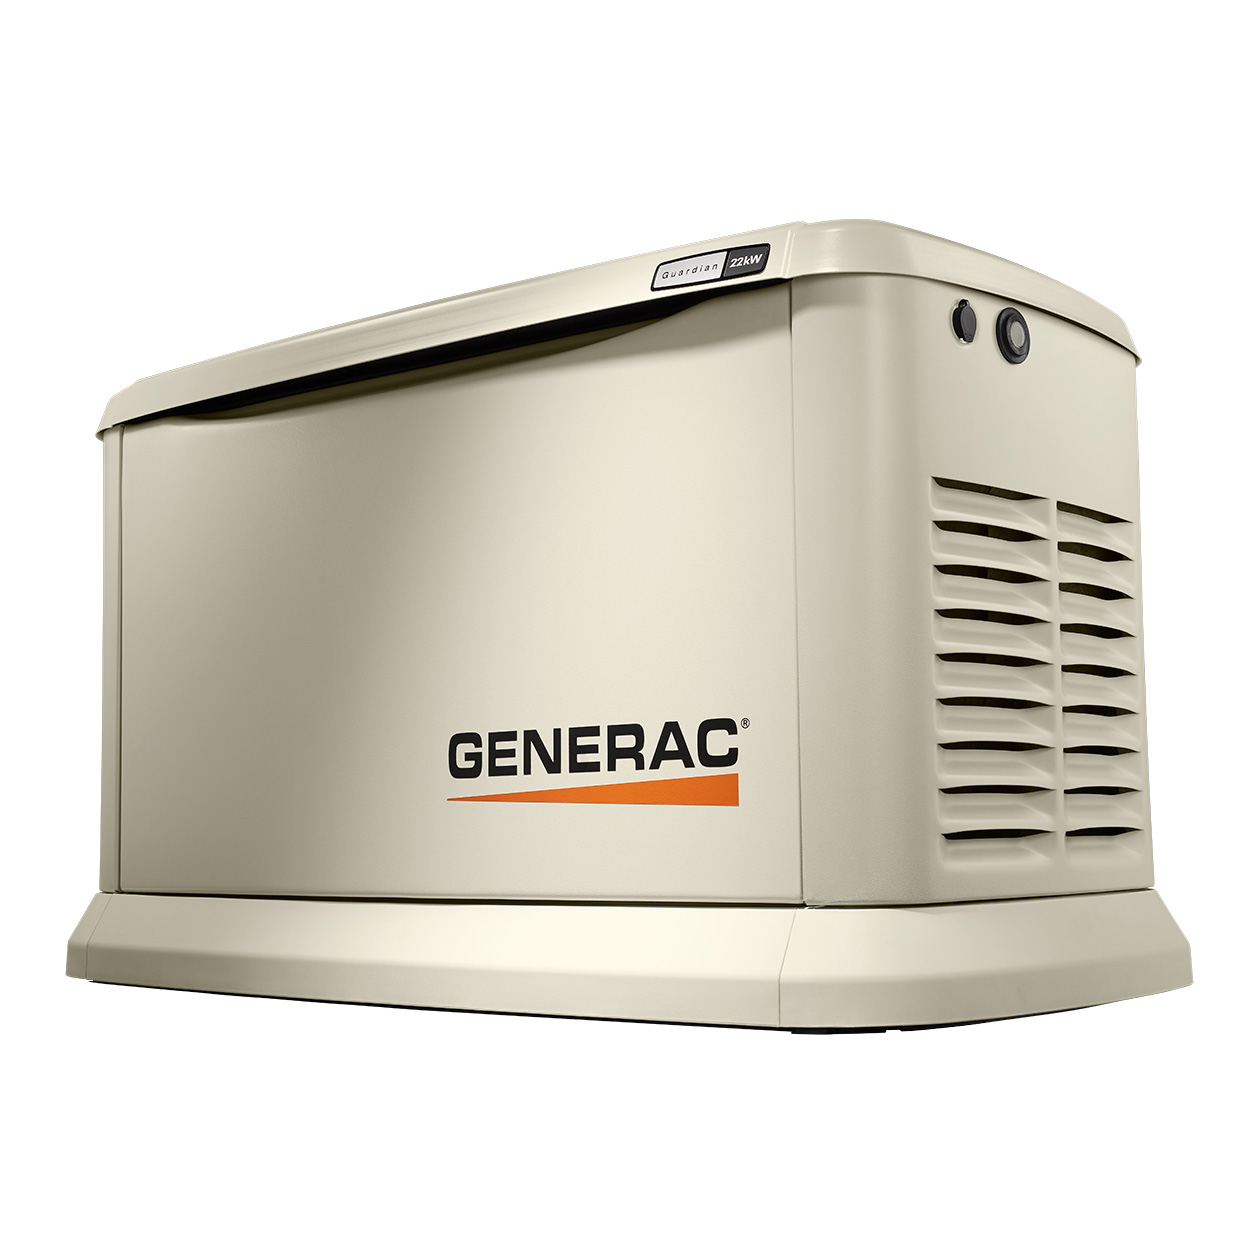 Generac GAS HSB 10kVA Air Cooled Standby Gas Generator FG0070481